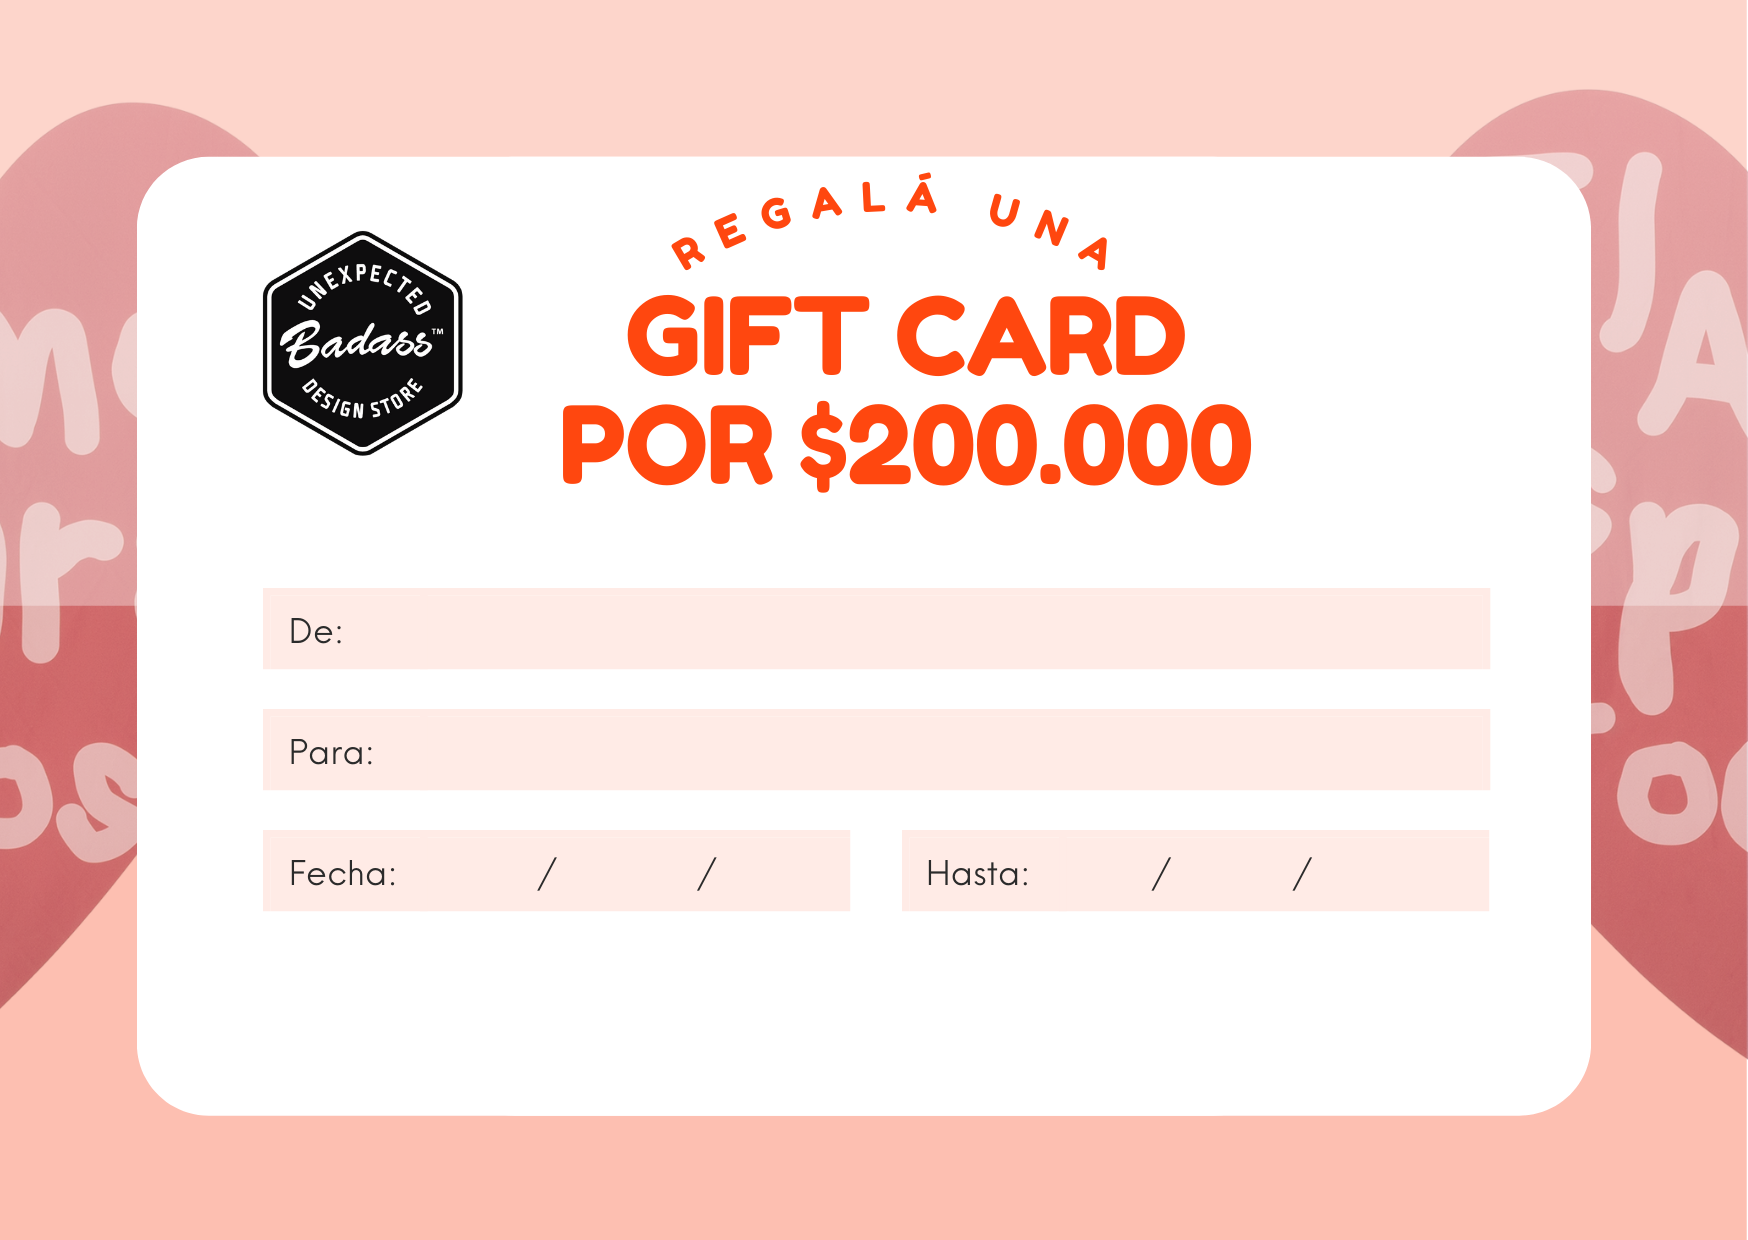 Gift Card - $200,000